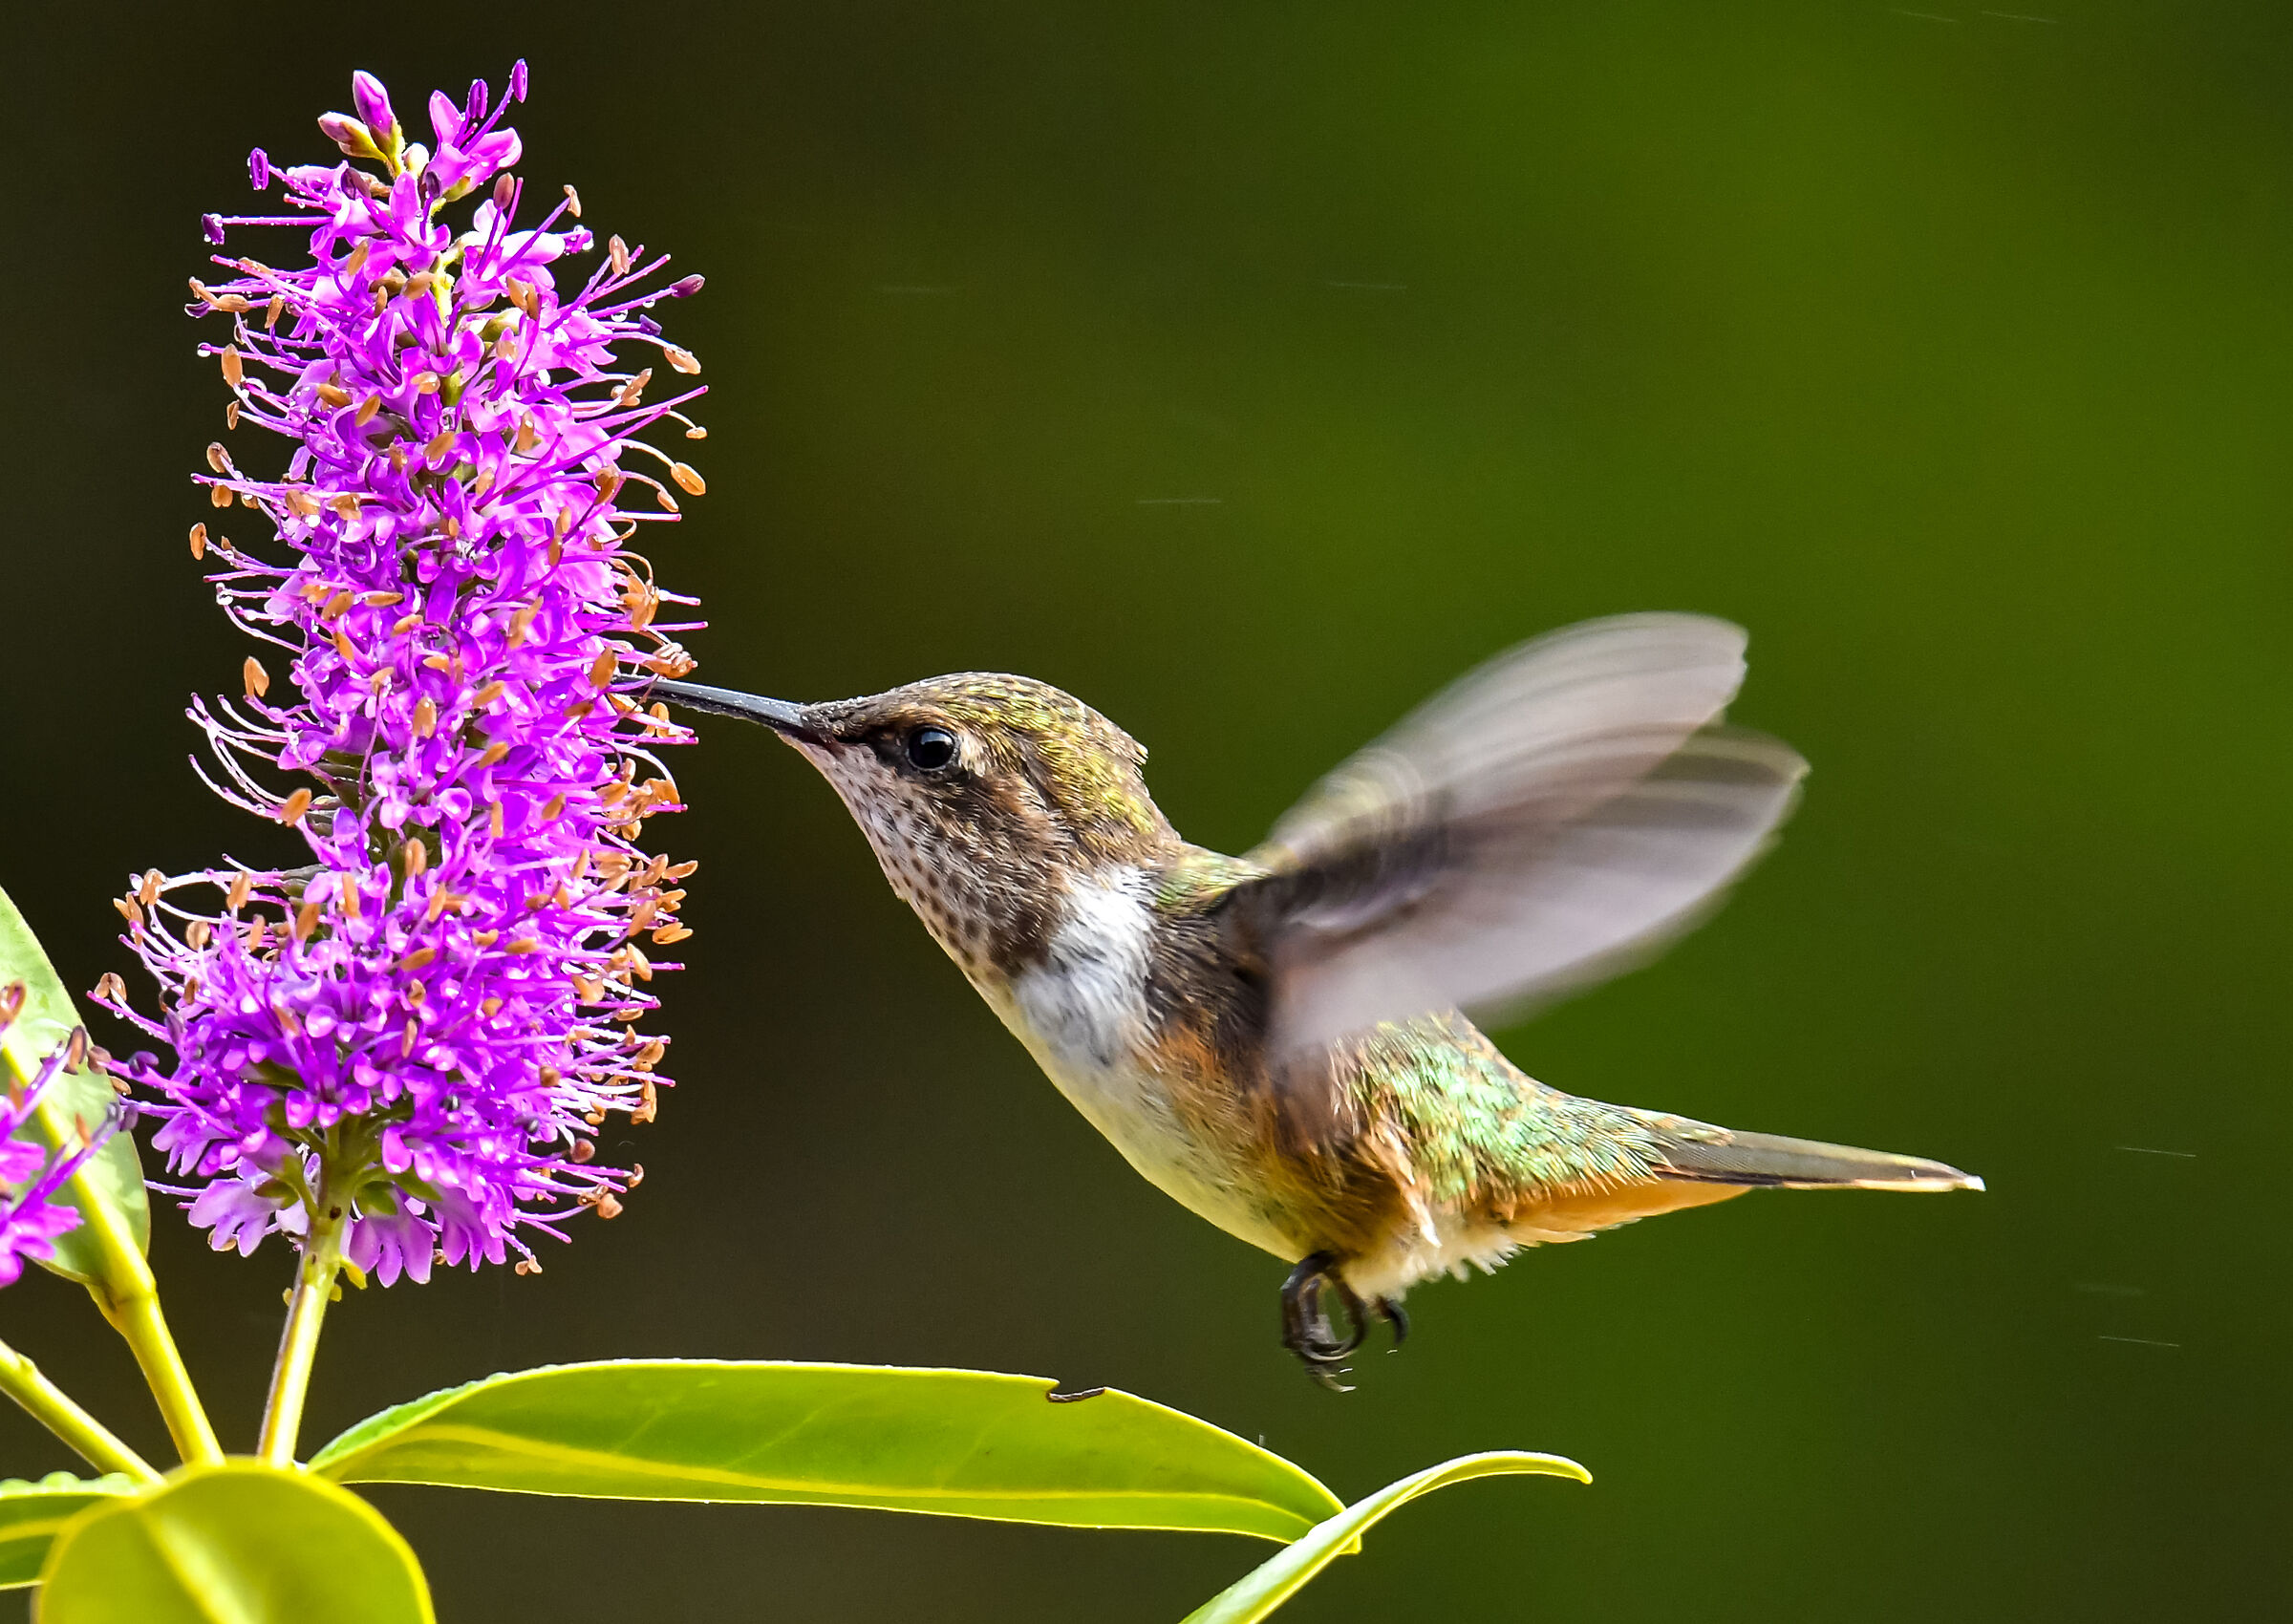 The Flight of the Hummingbird...